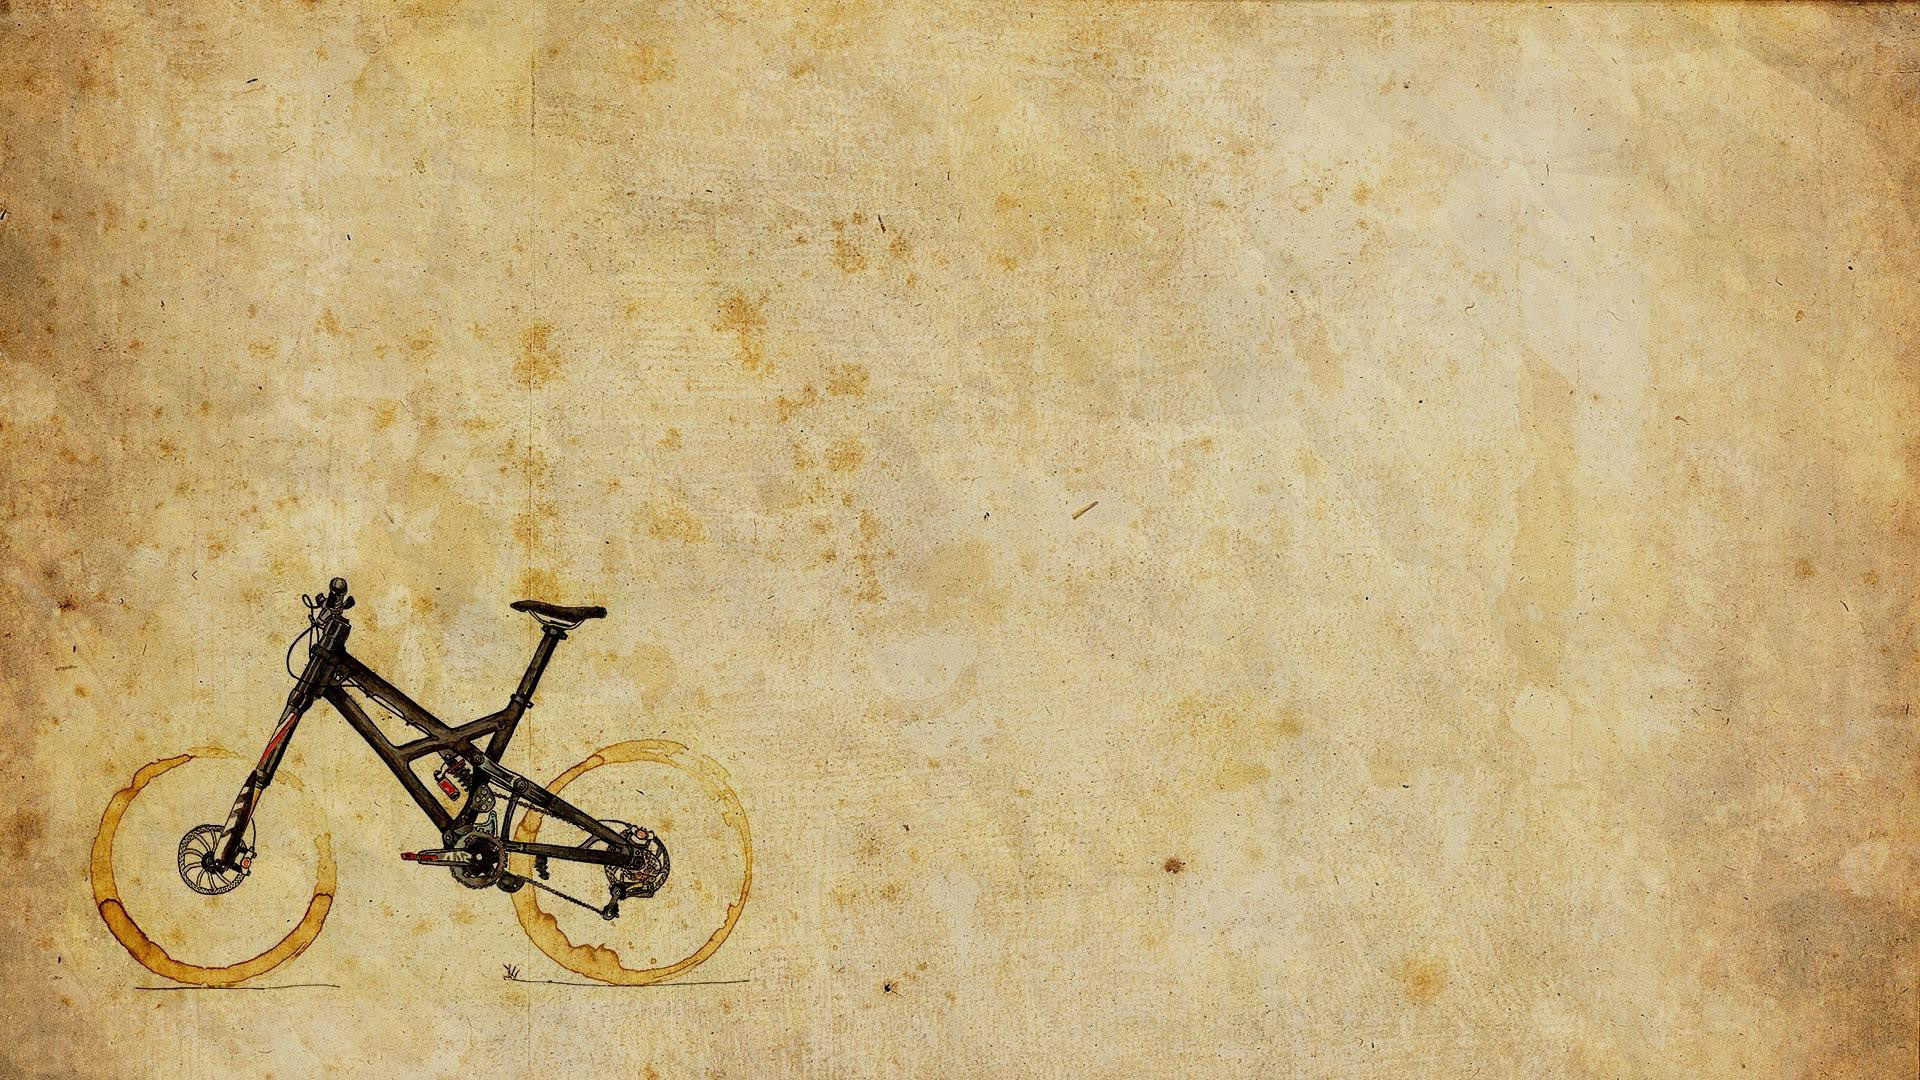 Coffee Stain Bike Bicycle Digital Art HDw Eweb4